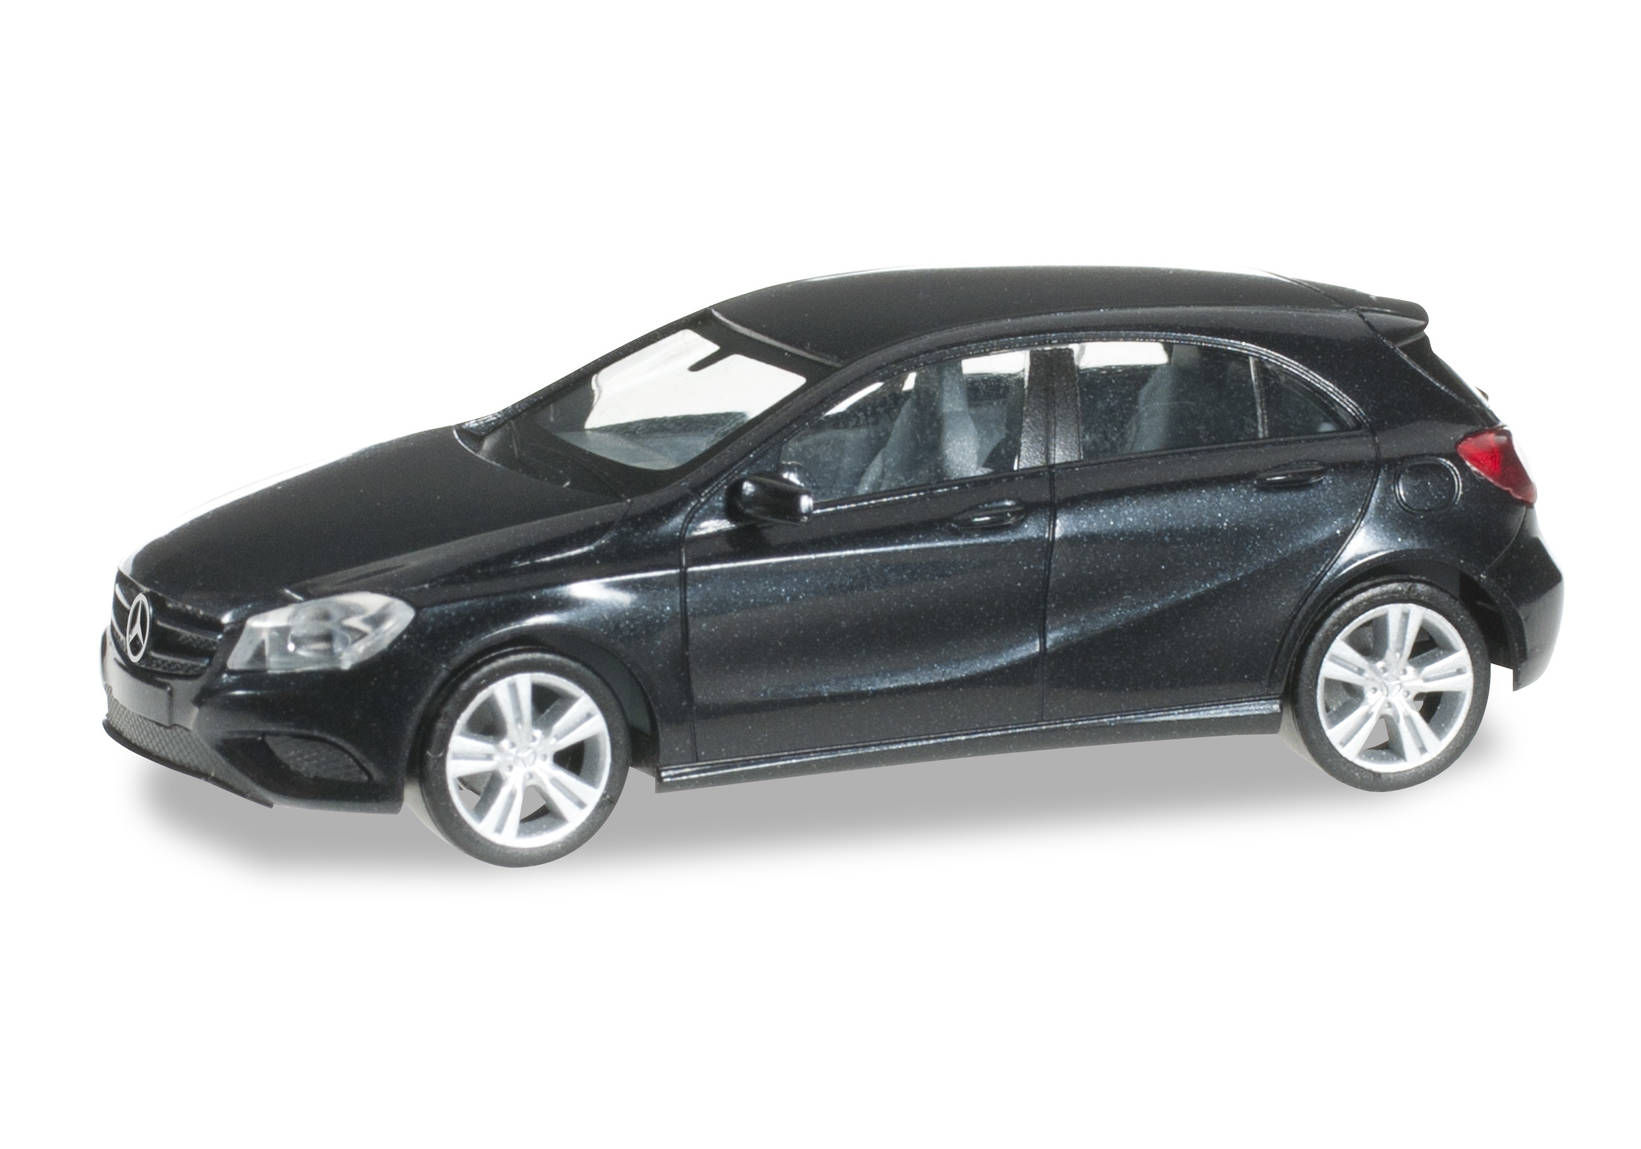 Mercedes-Benz A-Klasse, blacksaphir metallic